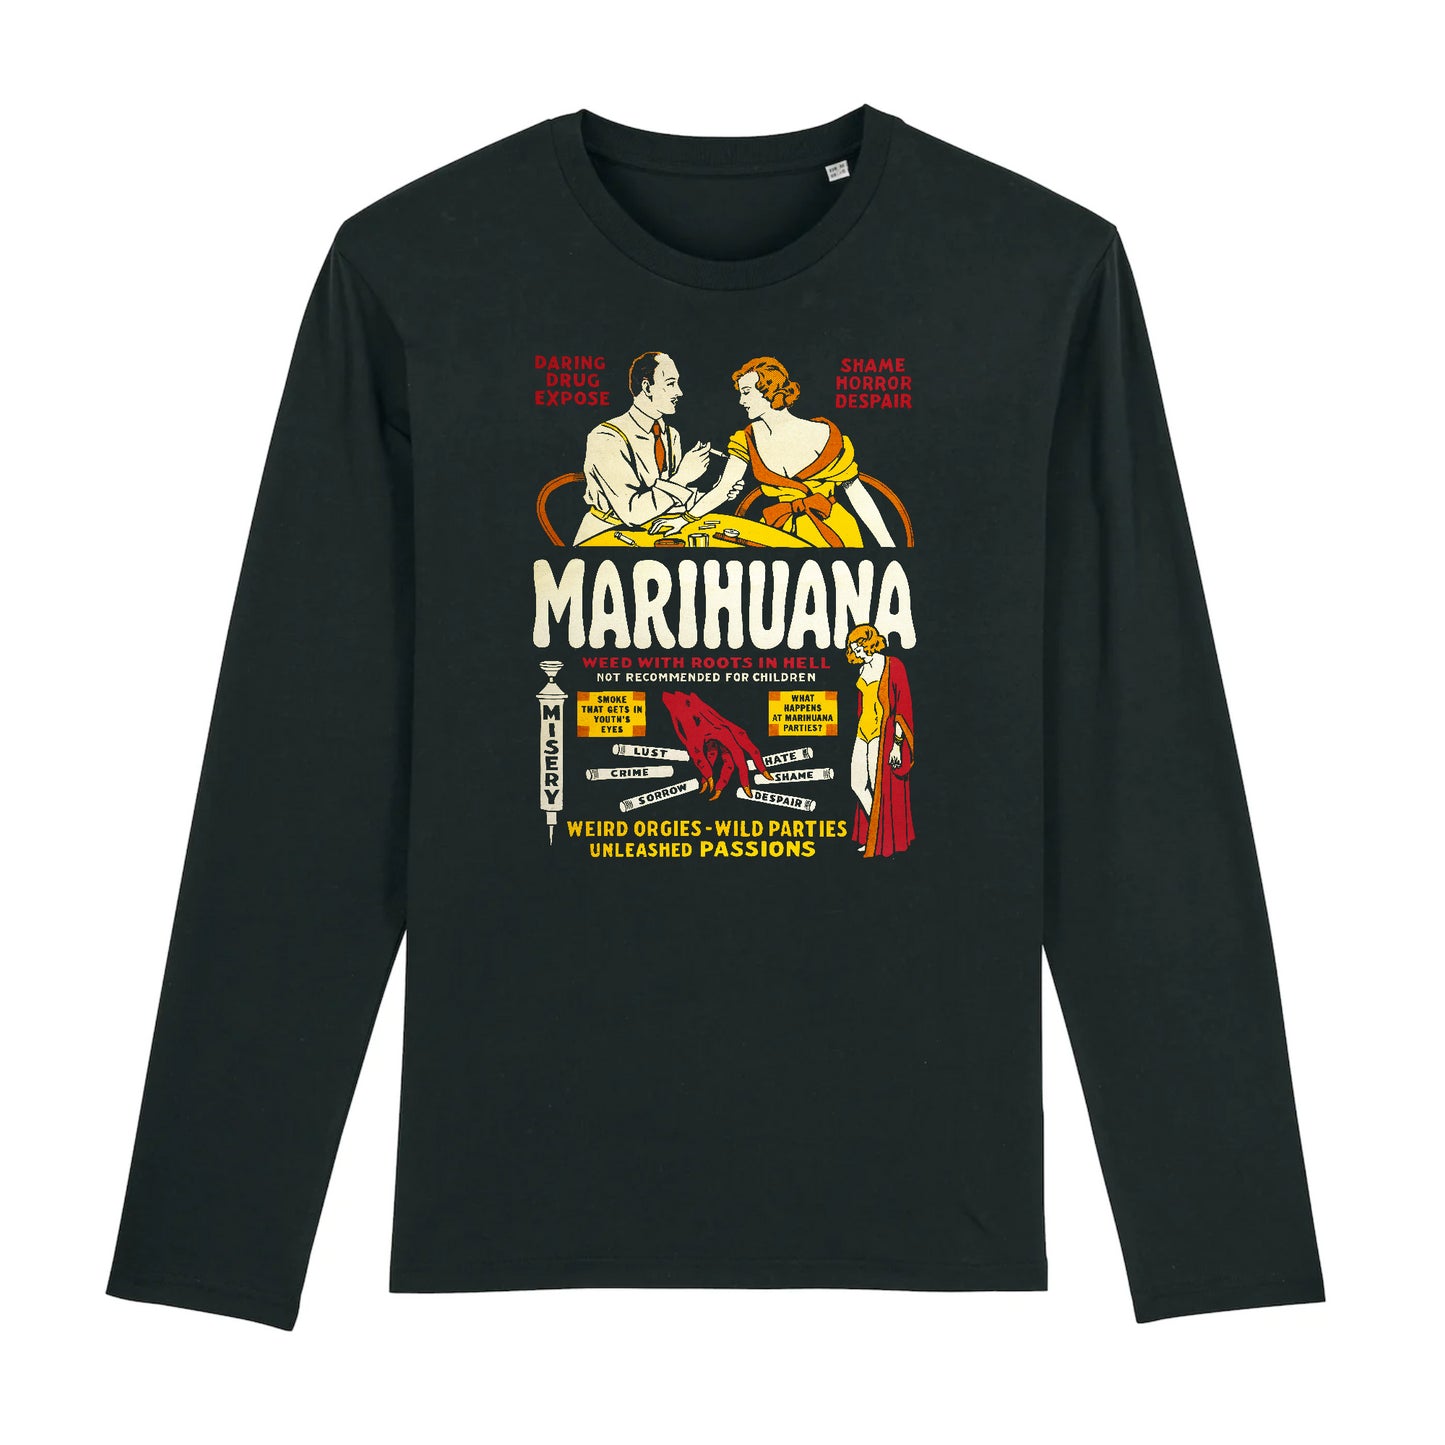 Marihuana, Weed With Roots In Hell Roadshow Atracciones, 1935 - Camiseta de manga larga